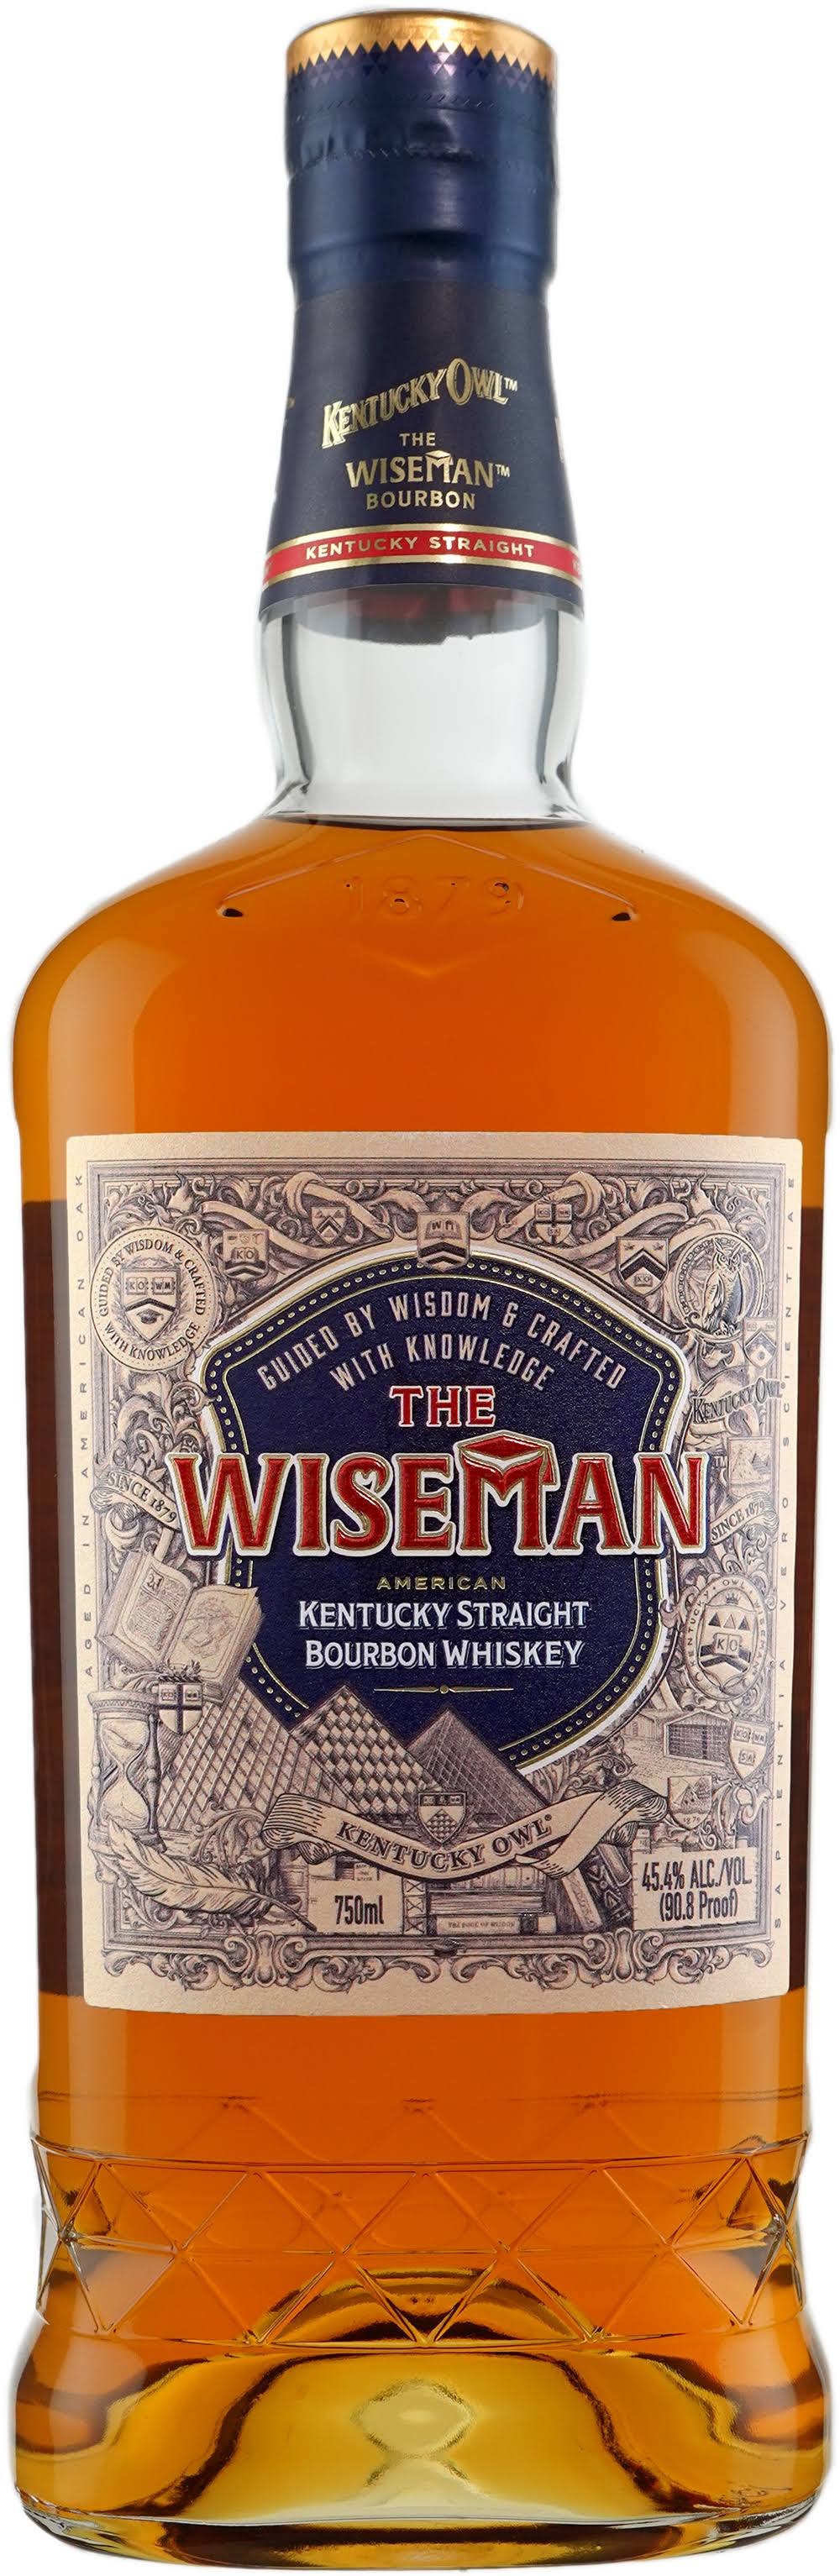 The Wiseman Bourbon Whiskey, Kentucky Straight - 750 ml